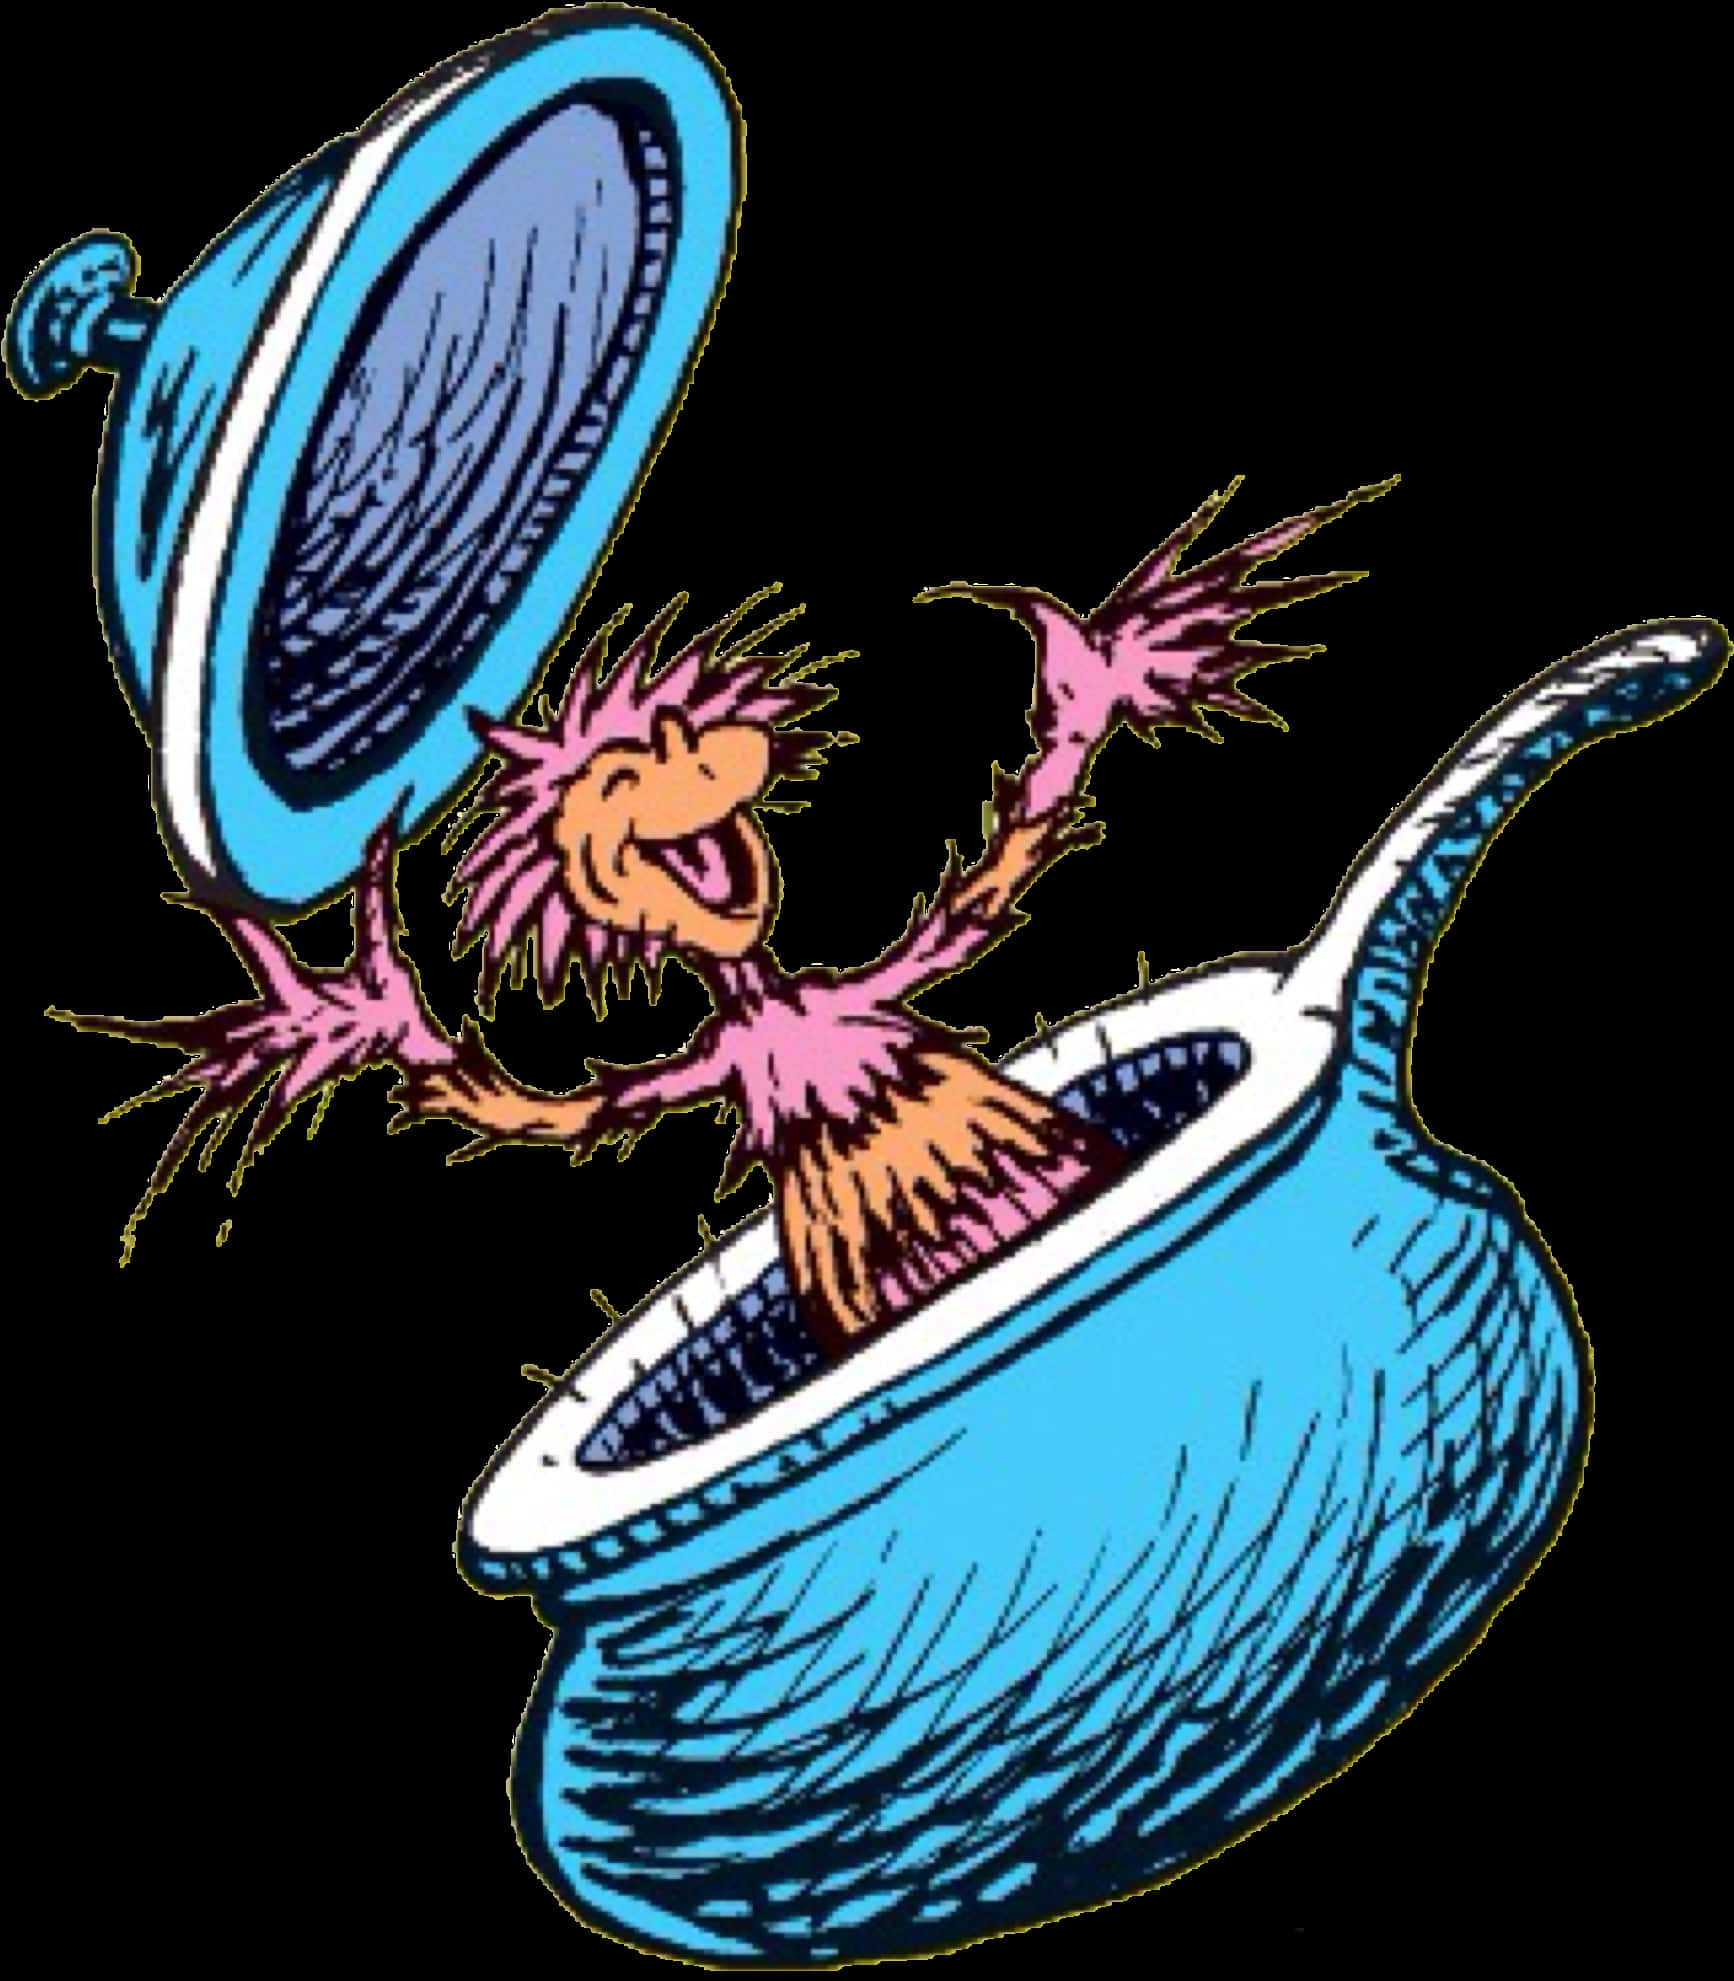 Cartoon Of A Person Inside A Pot